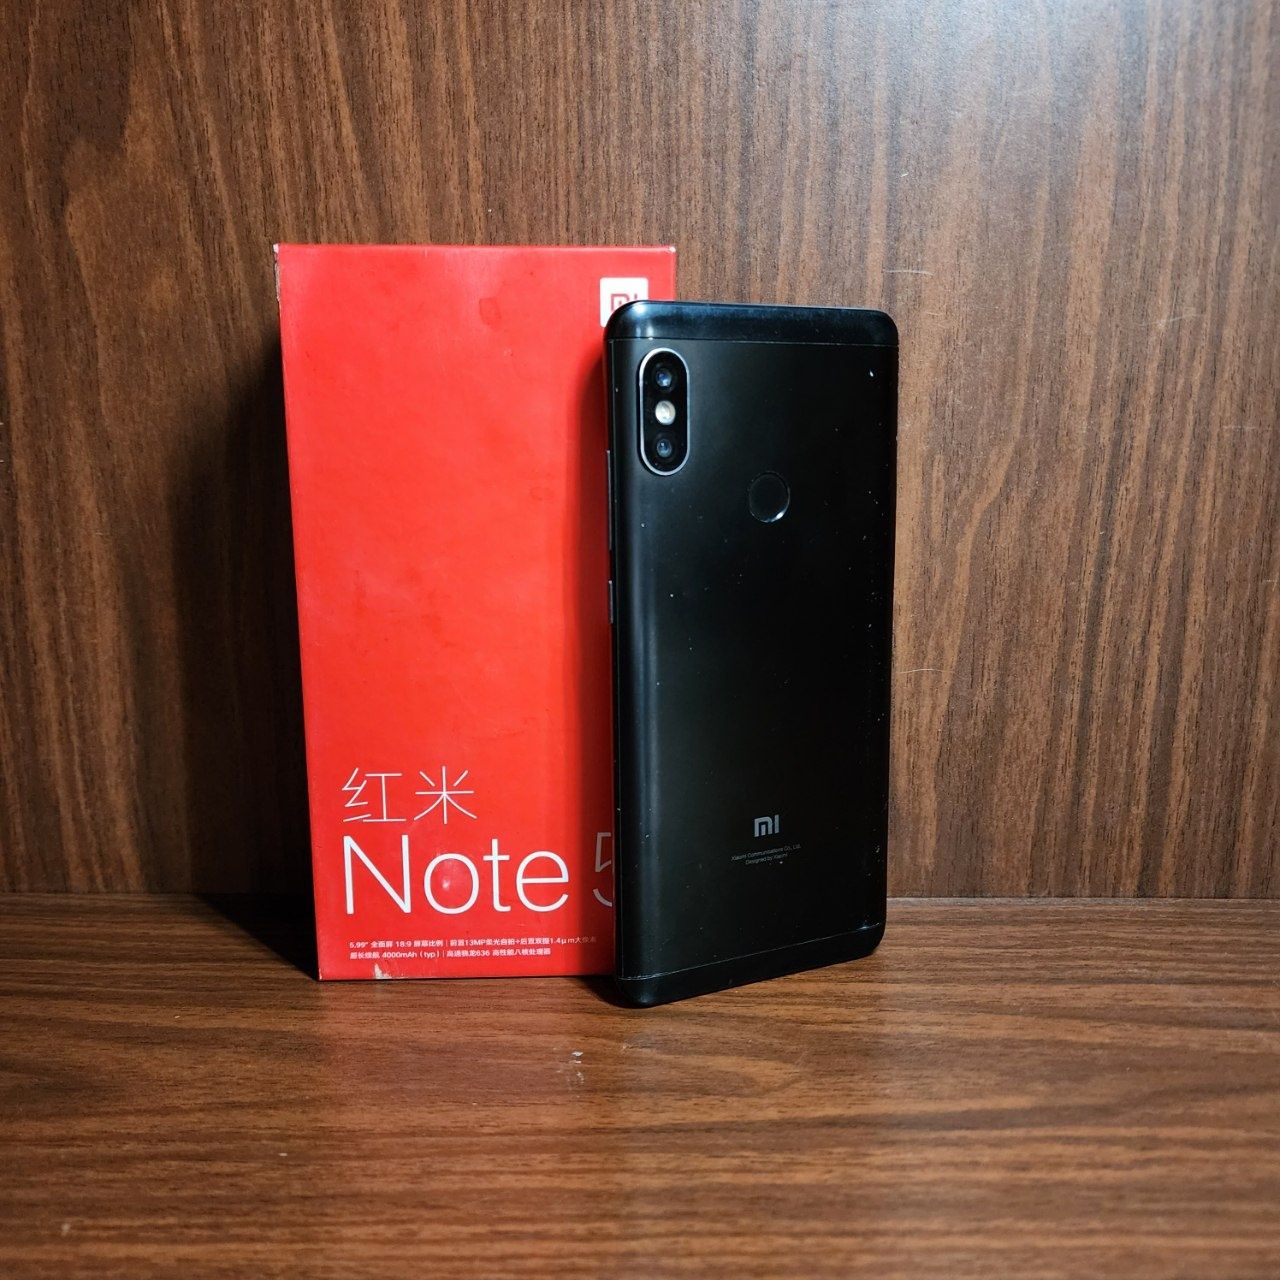 Redmi Note 5 sotiladi 64Gb